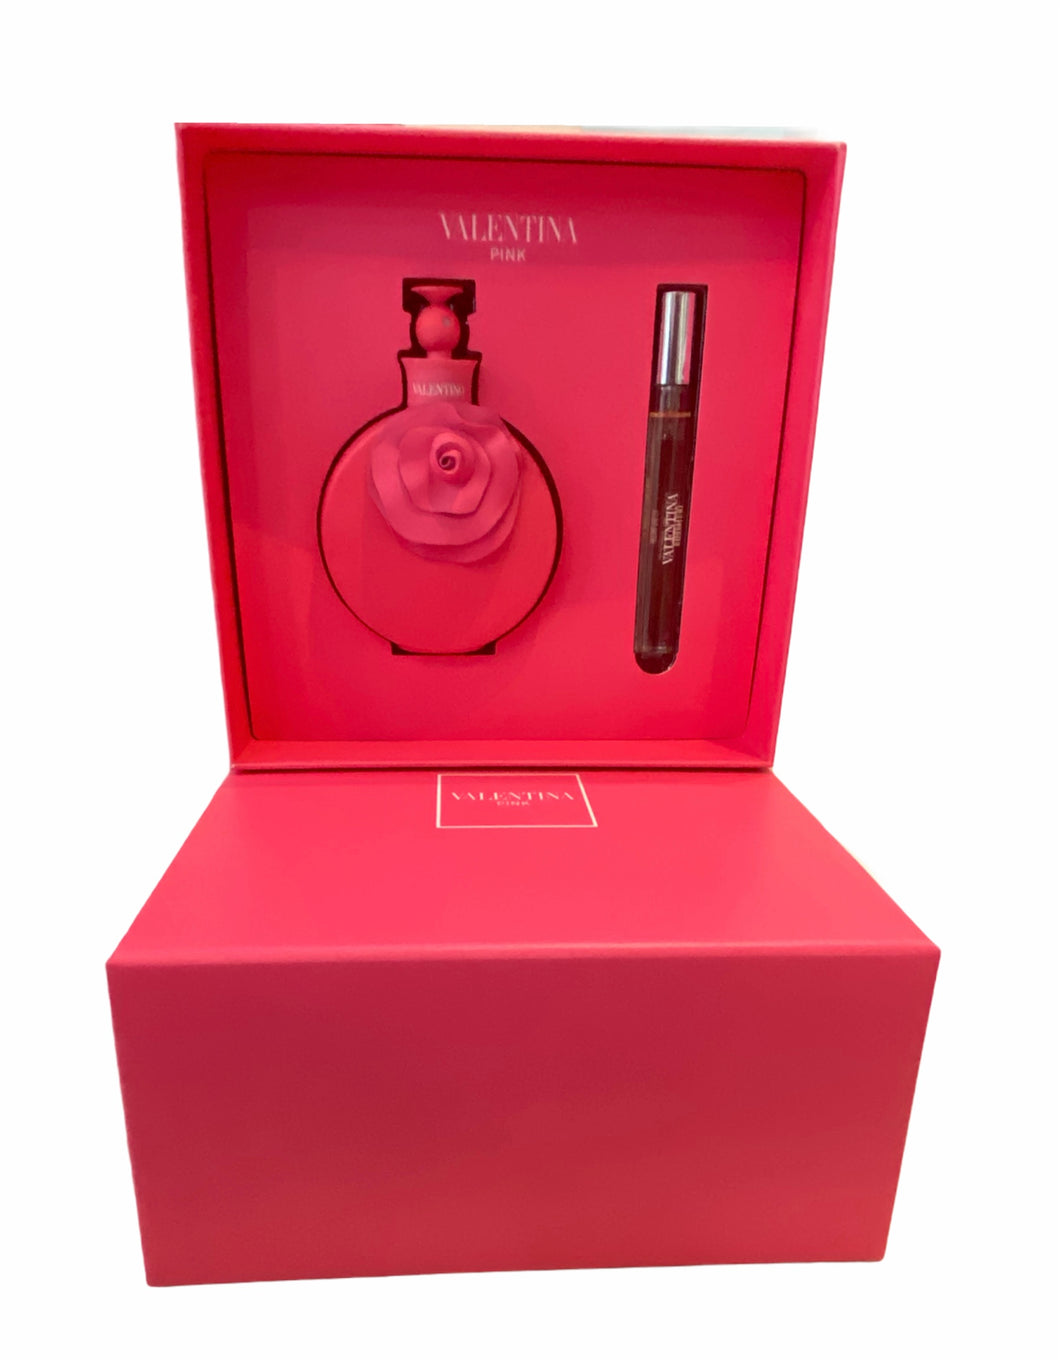 VALENTINA PINK Gift Set 2 Eau de Parfum 3.4oz, for women always special perfumes & gifts